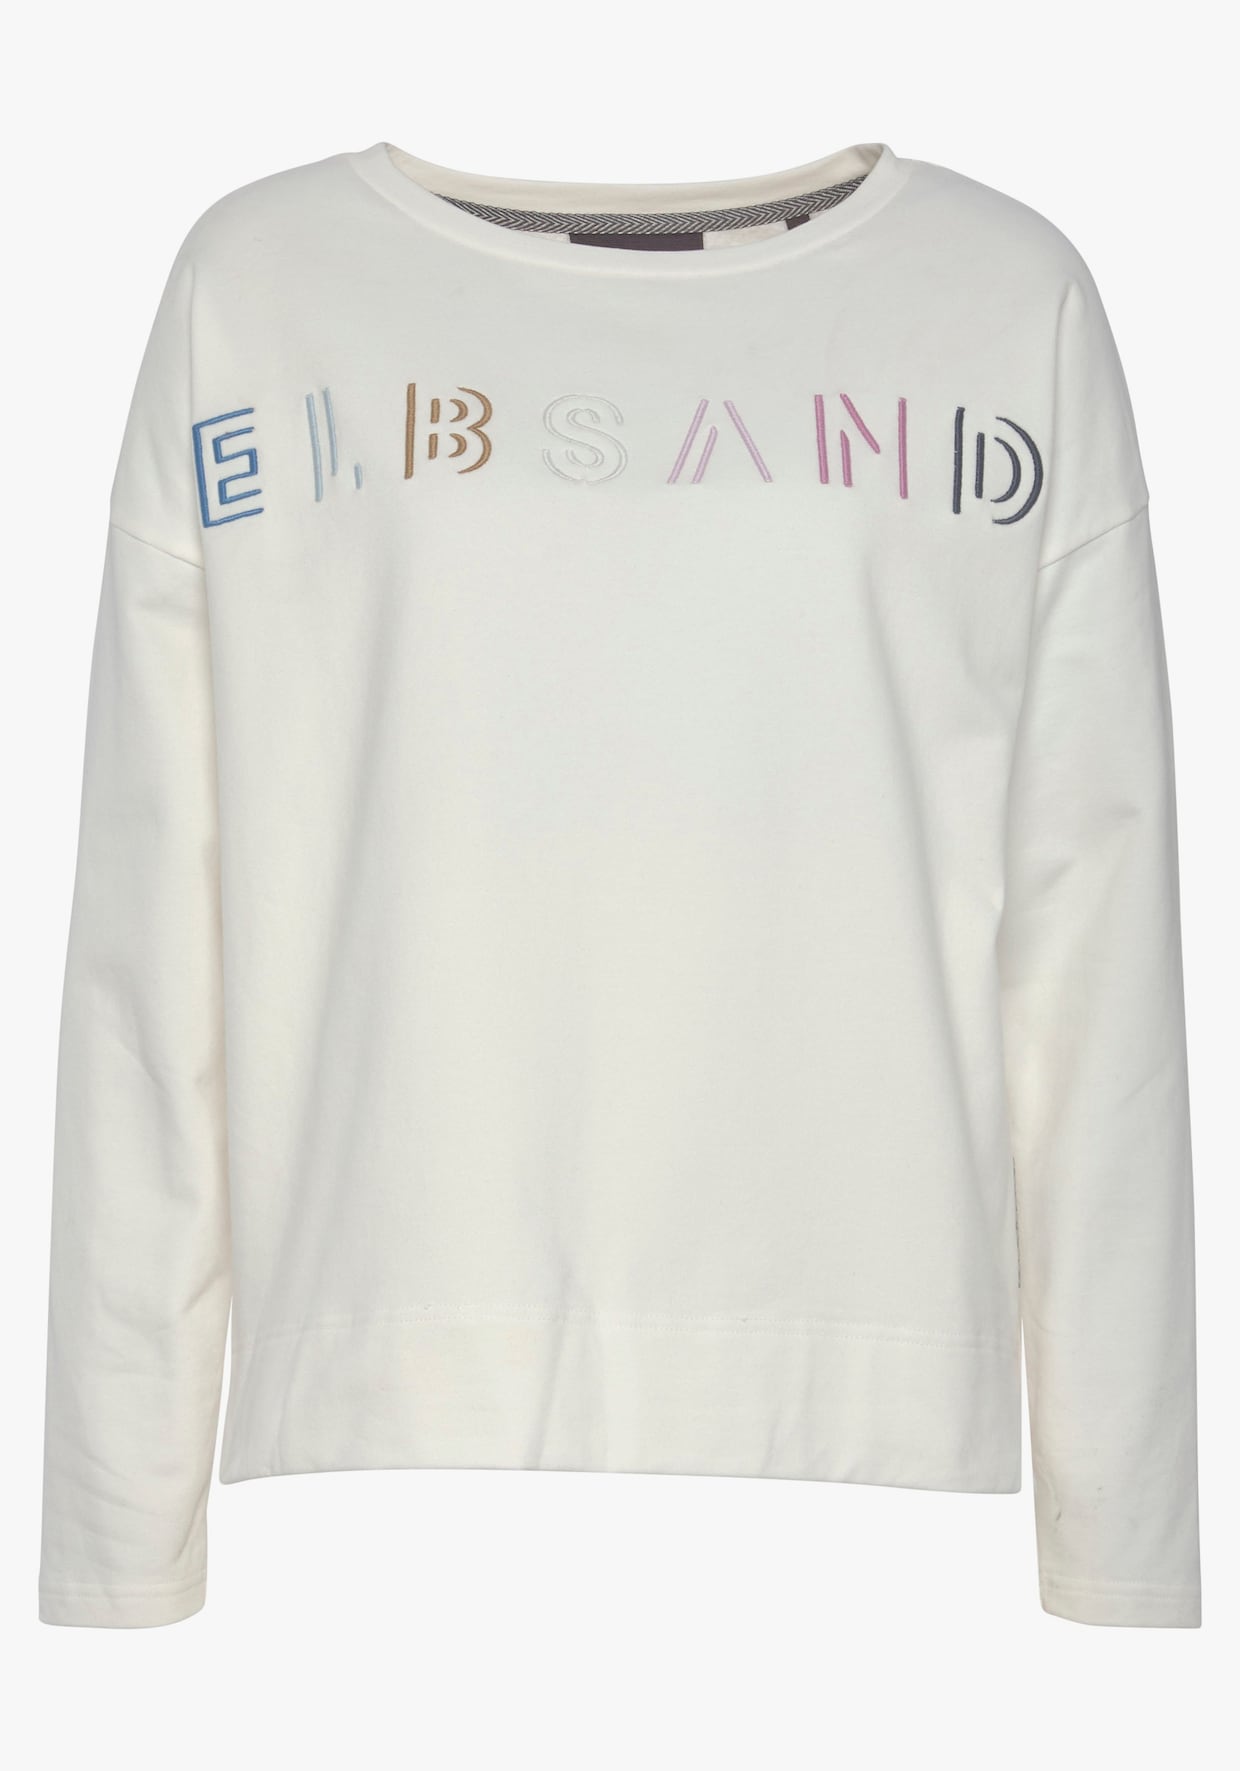 Elbsand Sweatshirt - weiss